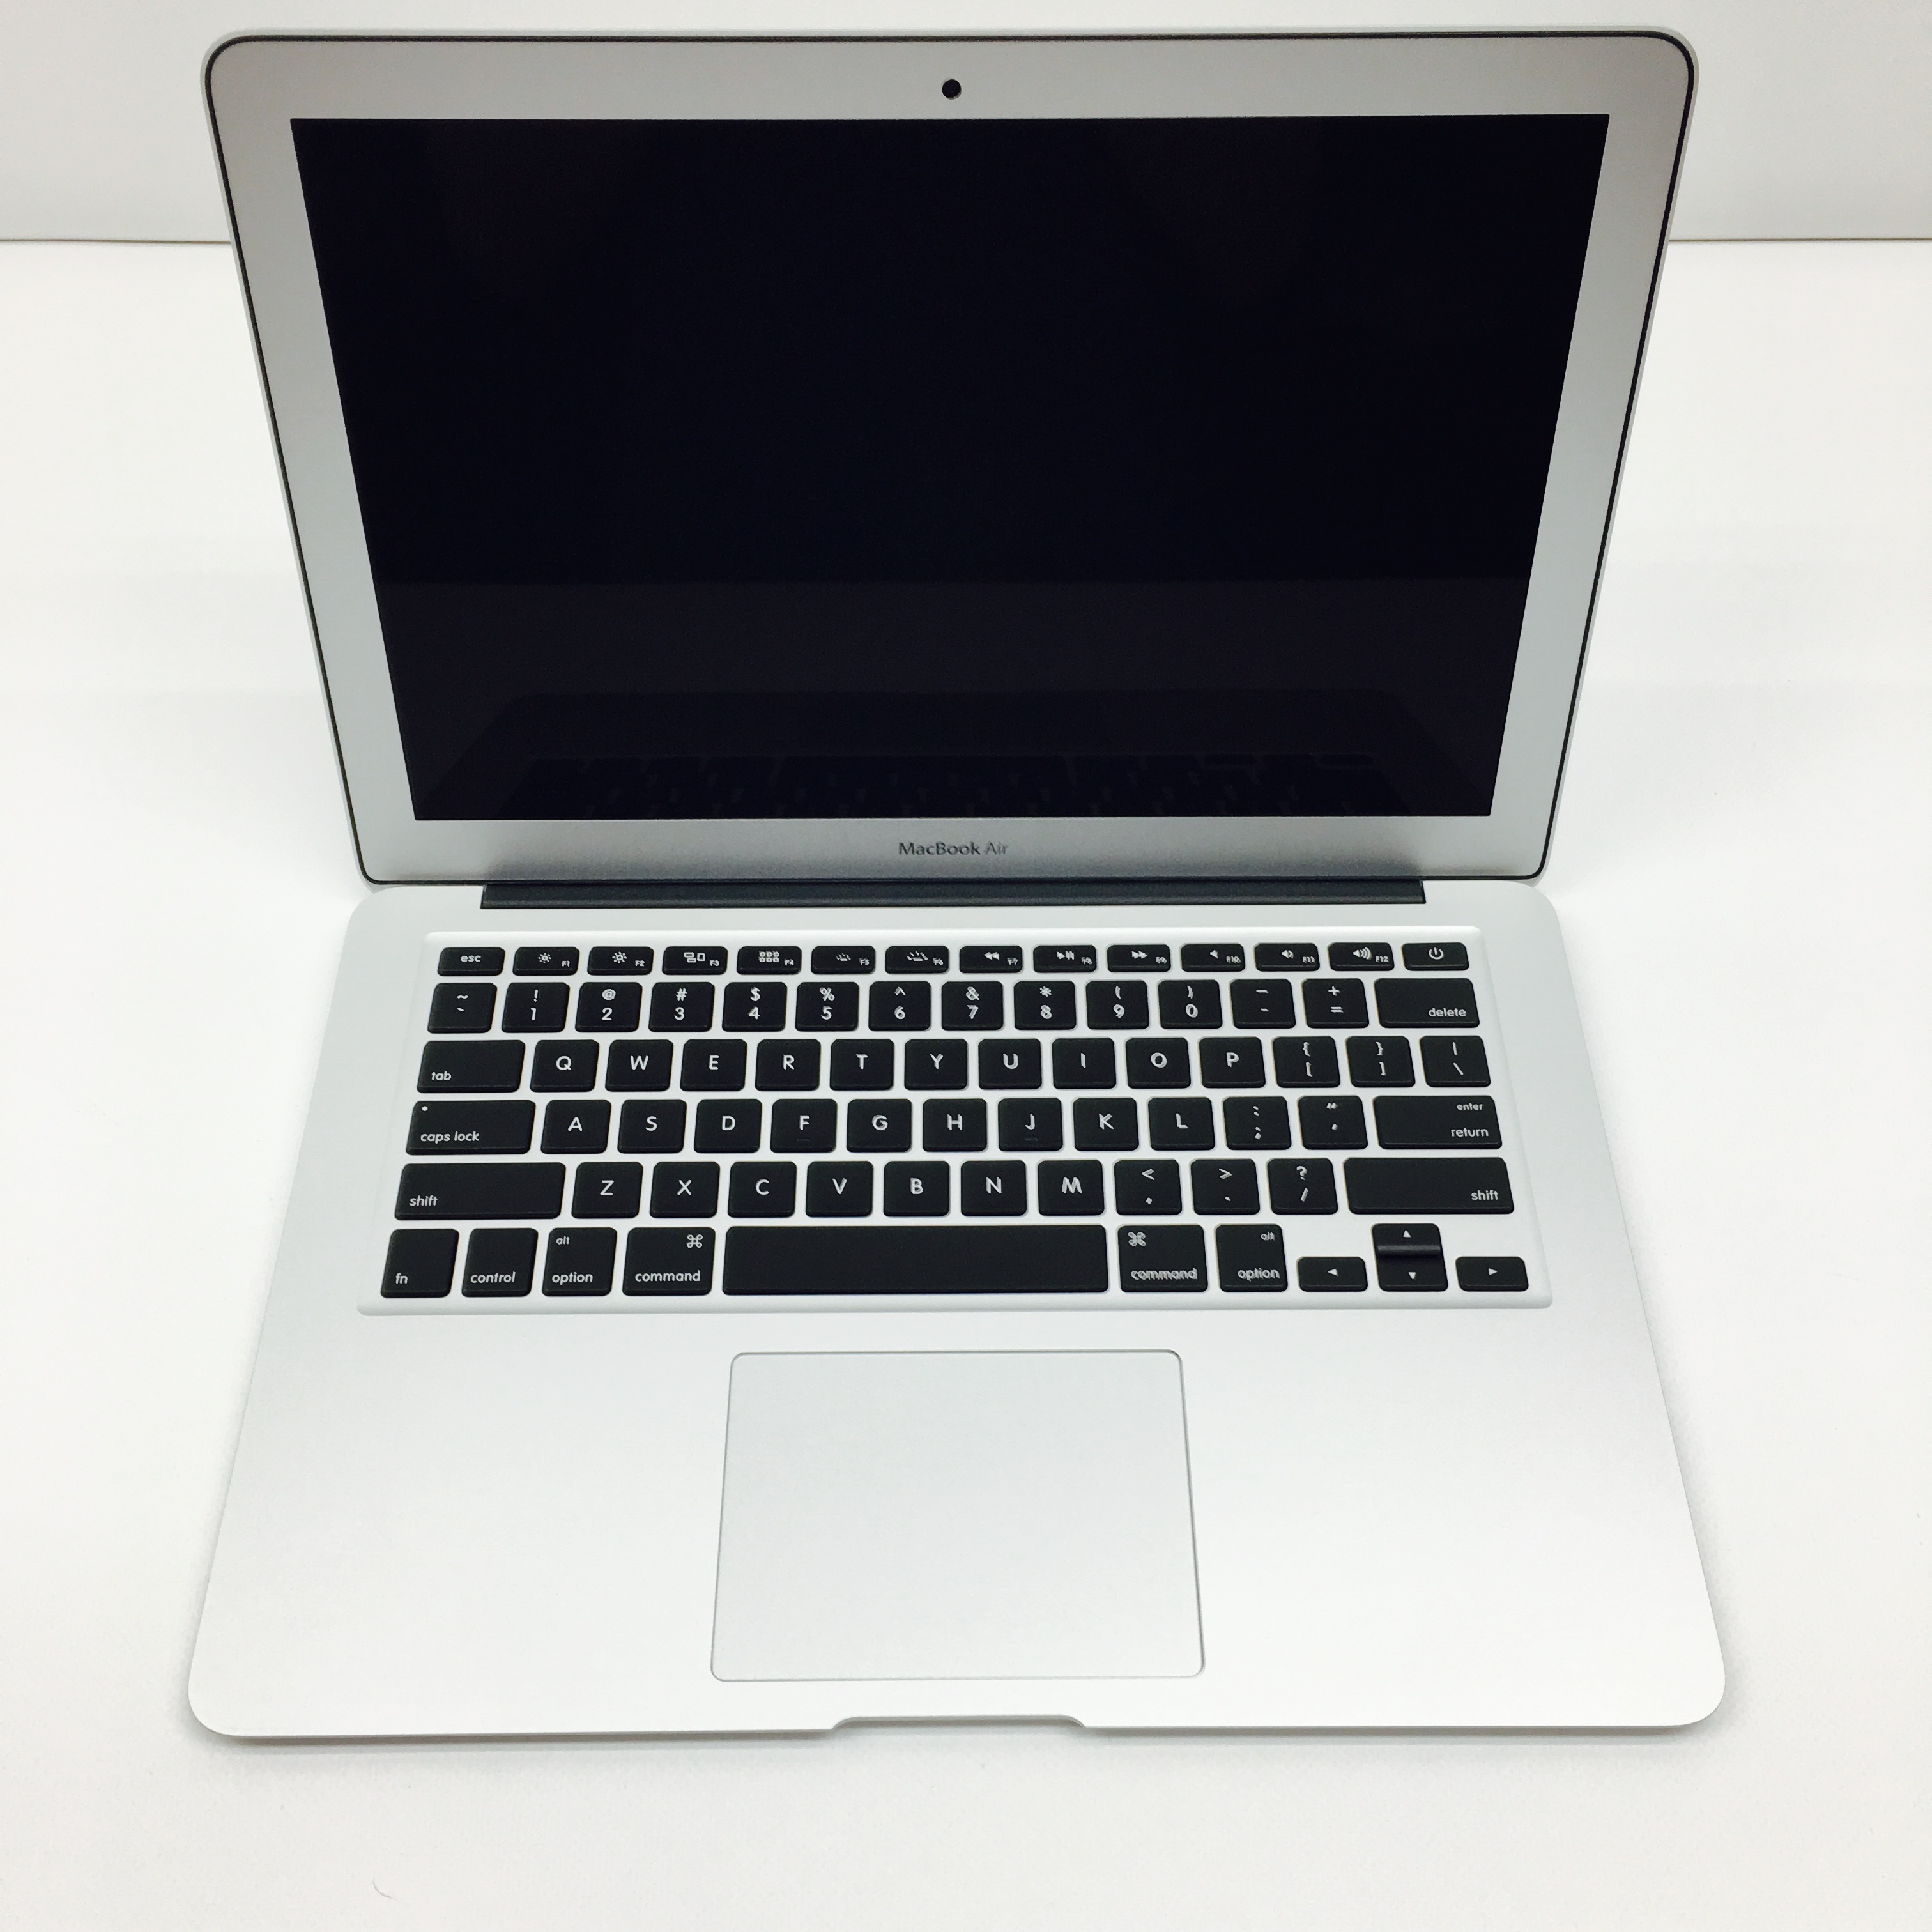 Fully Refurbished MacBook Air 13" Mid 2013 INTEL CORE I5 1.3GHZ / 4GB